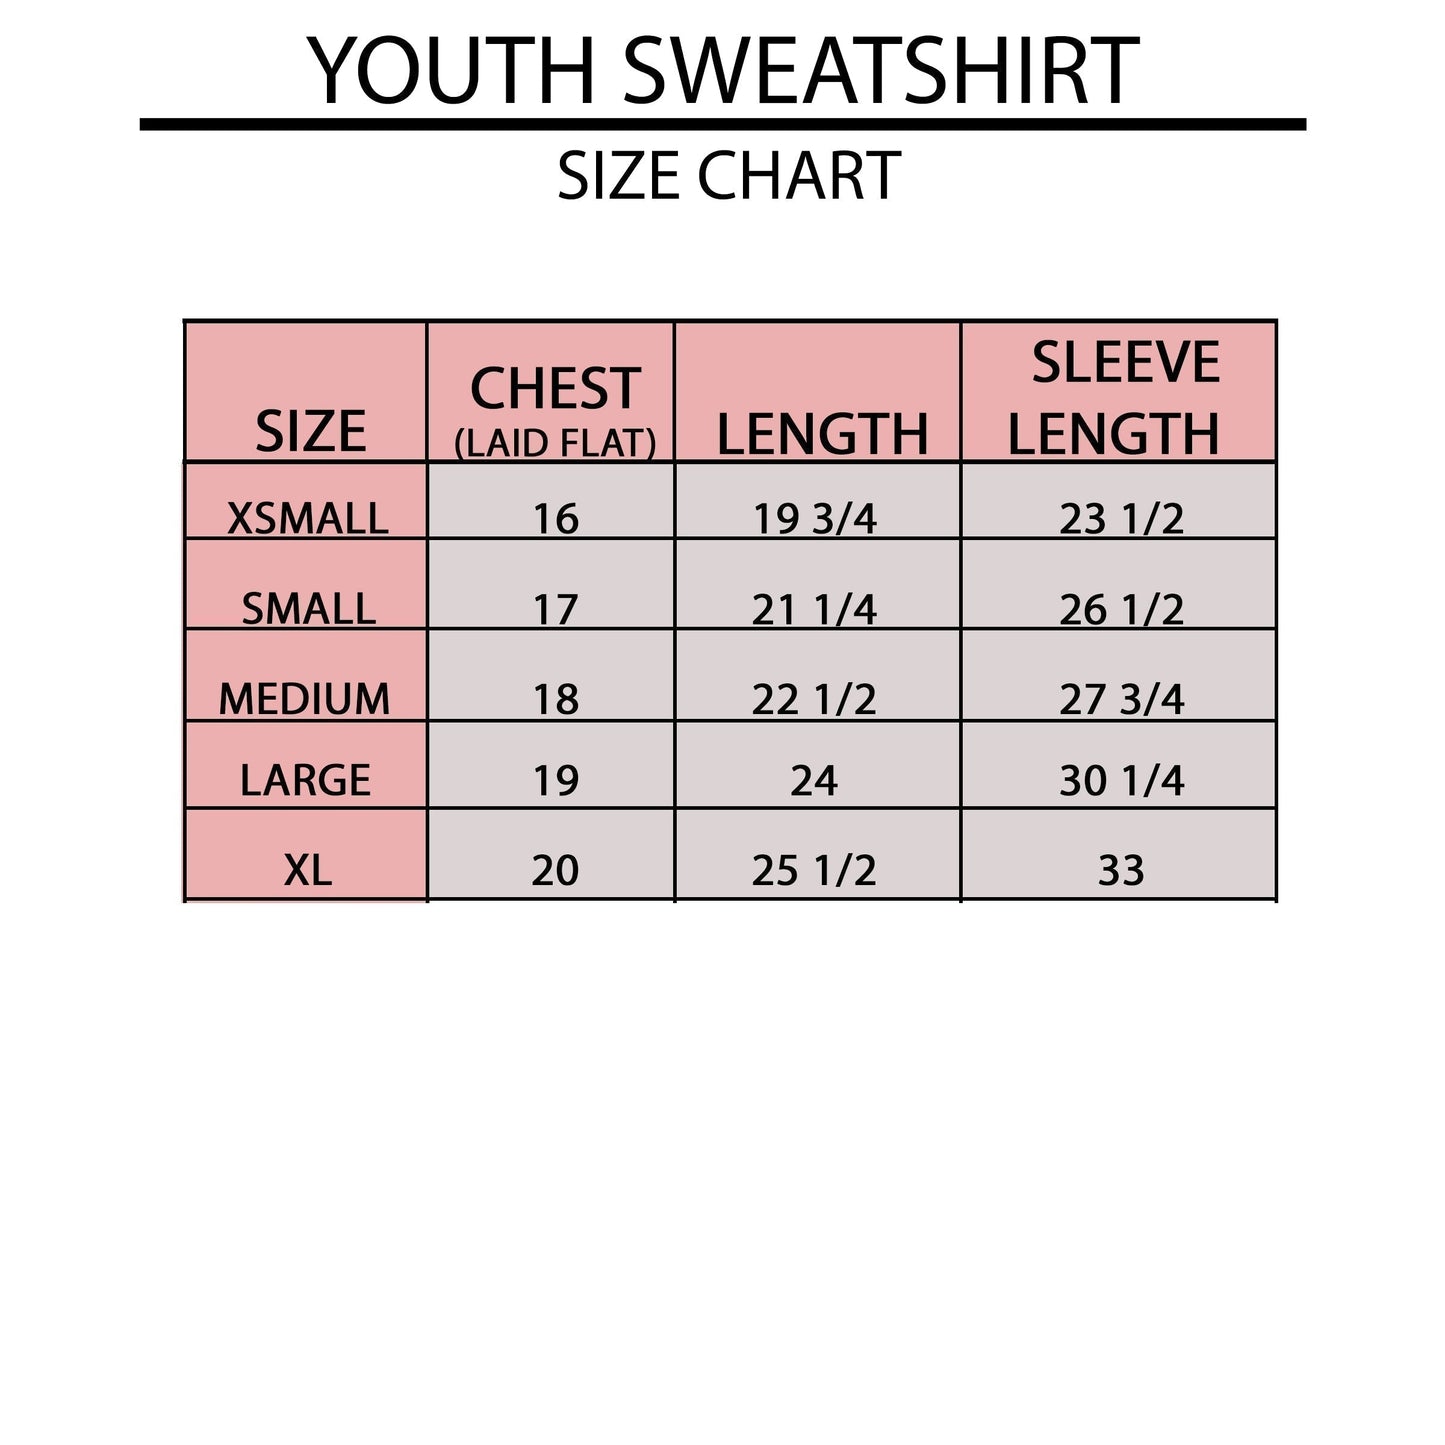 Big Sis Club | Youth Graphic Sweatshirt